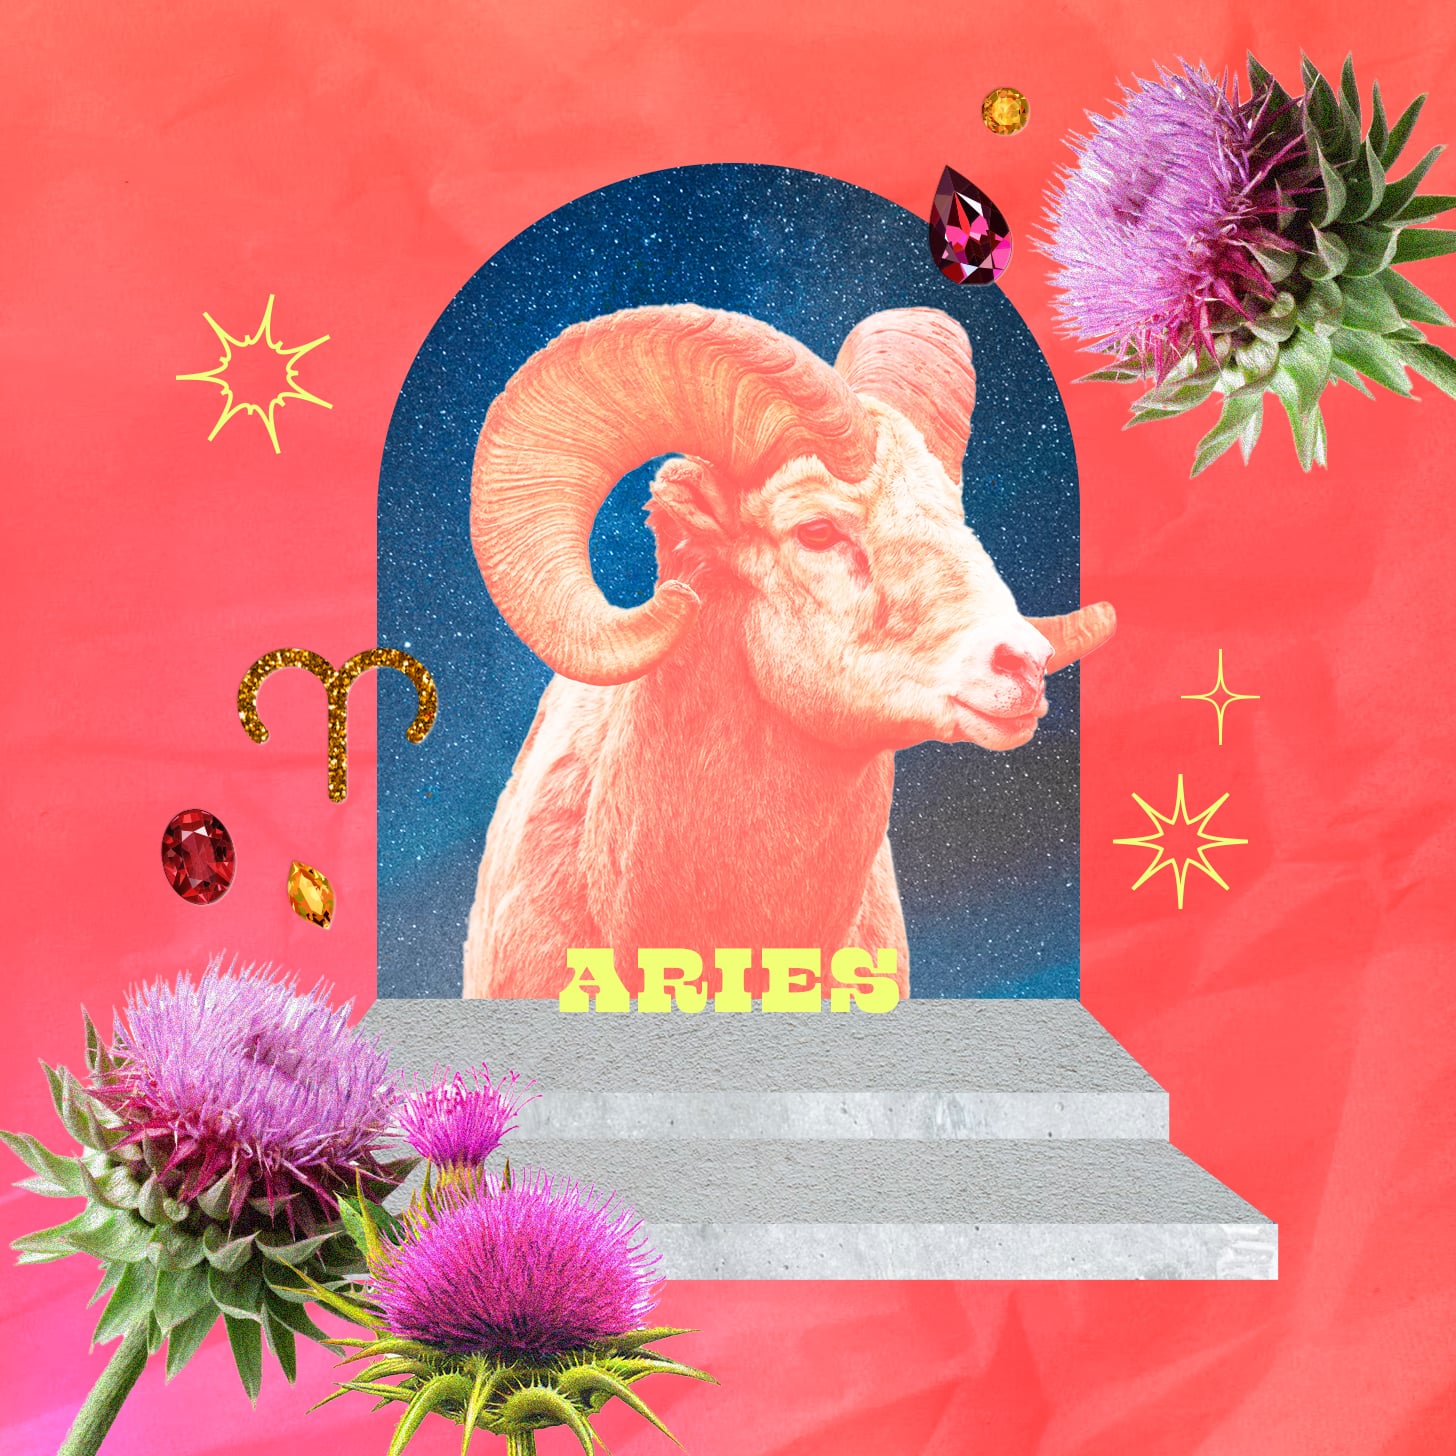 Aries weekly horoscope for Nov. 27, 2022